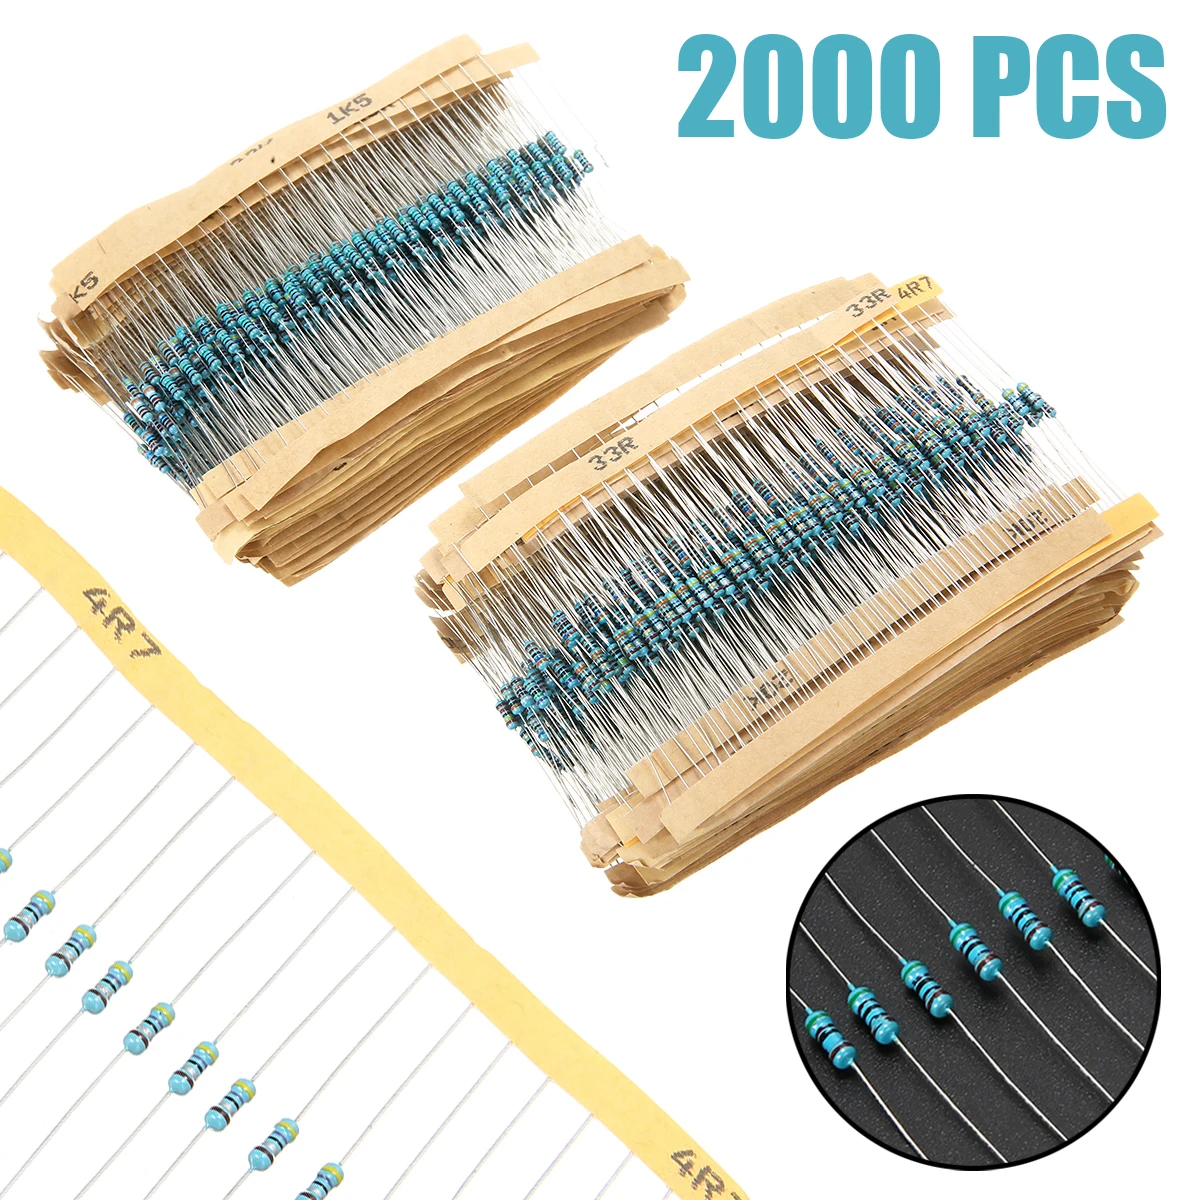 2000pcs 100 Values 1ohm~1M 1/4W Metal Film Resistors Assortment Components Kit 